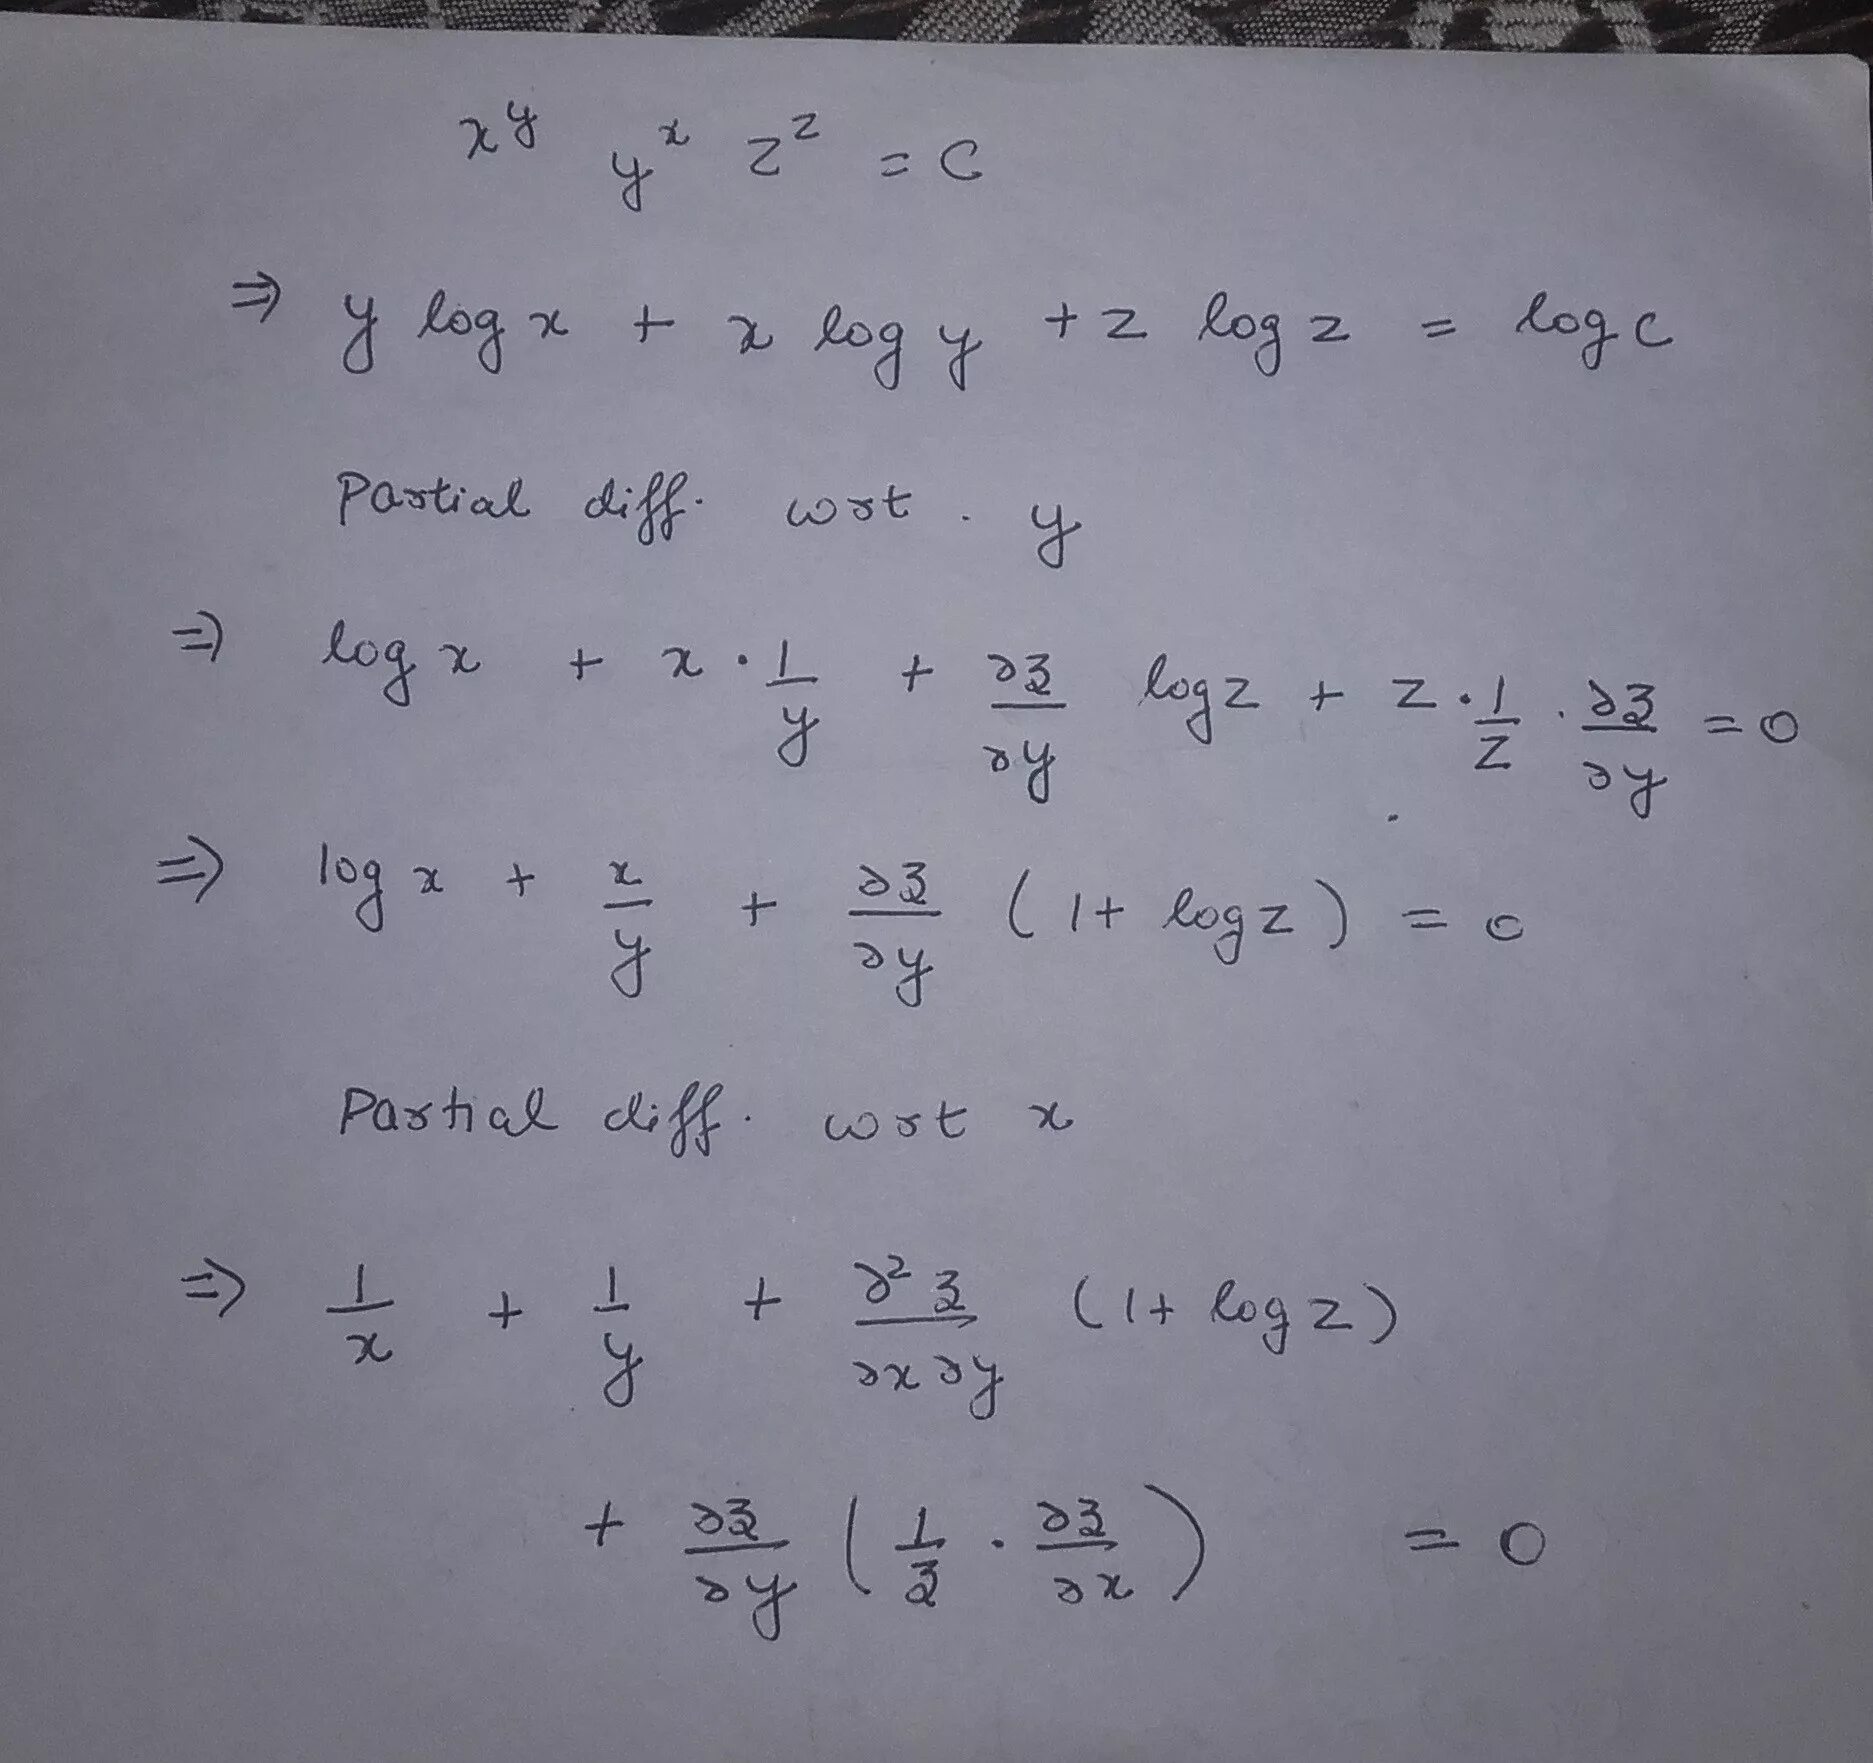 X 0 y 10 z. (X-Y)(X+Y) формула. (X+Y+Z)^2 формула. X^2+Y^2=Z^2. Y>Z+X решение.